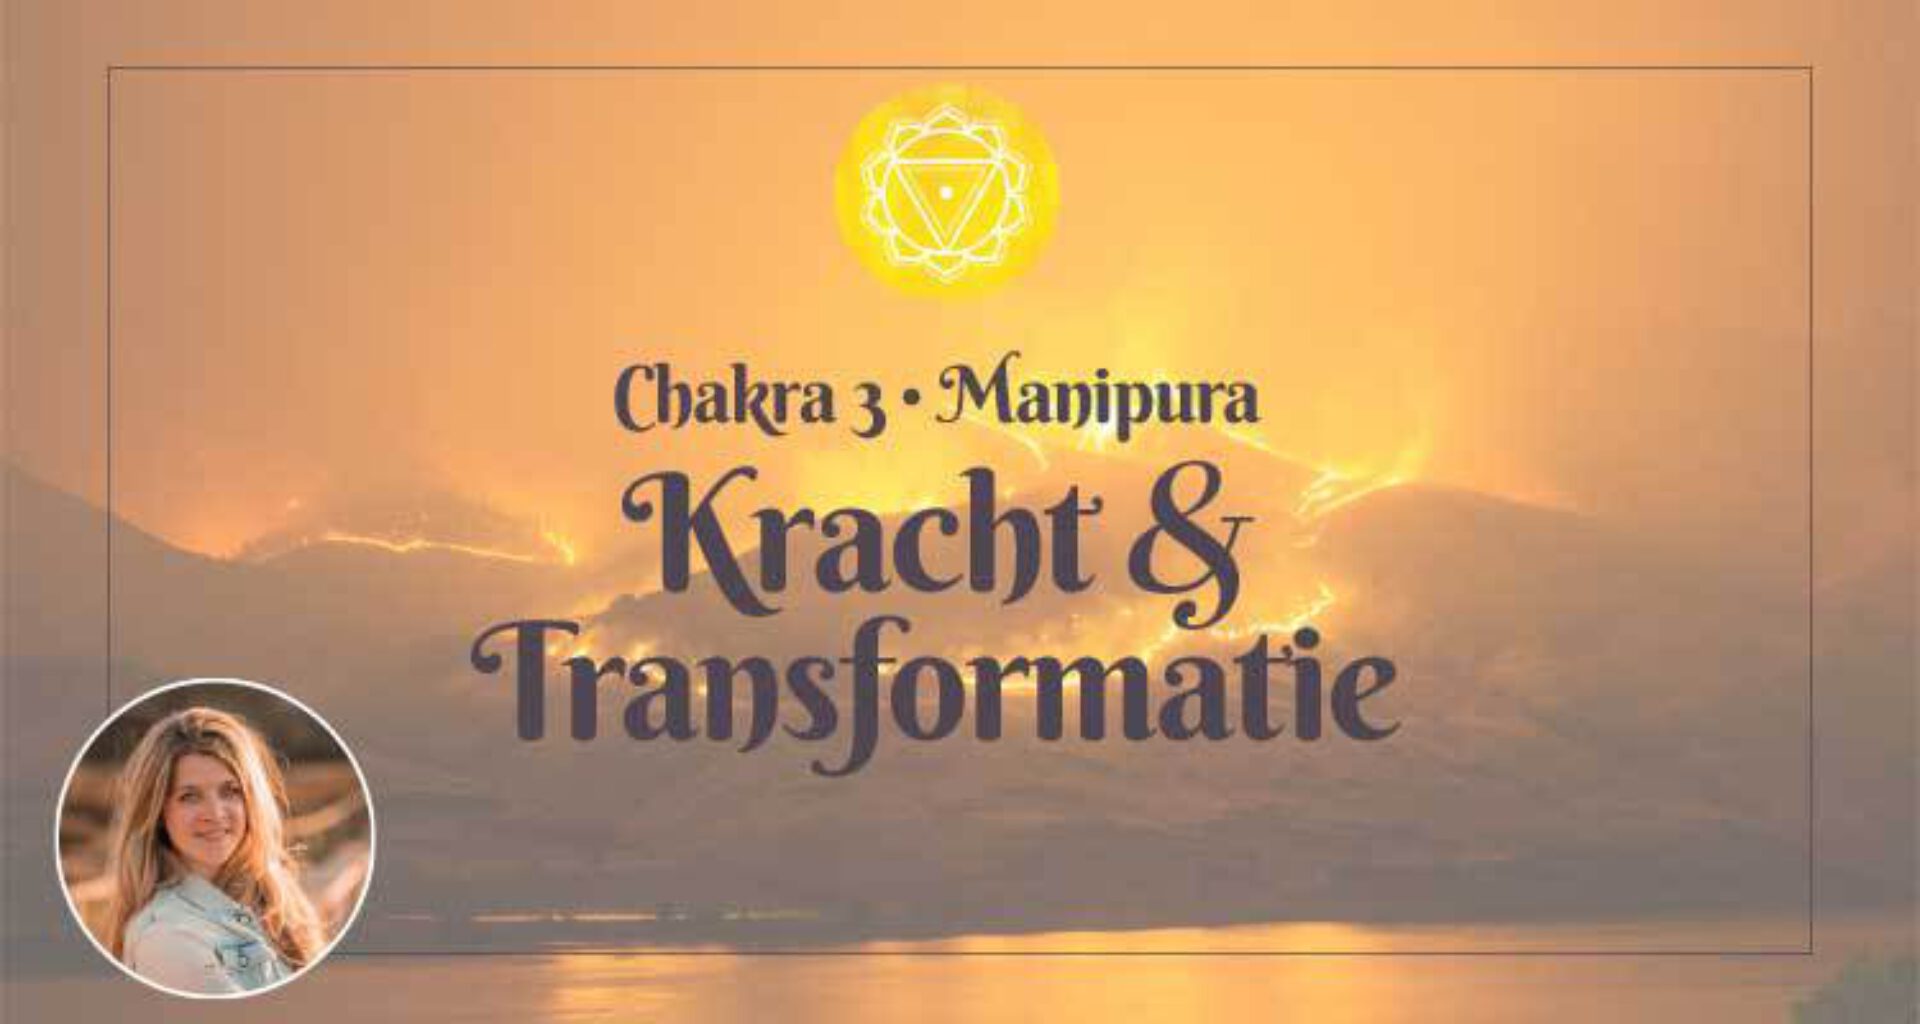 Chakra 3 • Manipura: kracht & transformatie Incl. Worksheet!